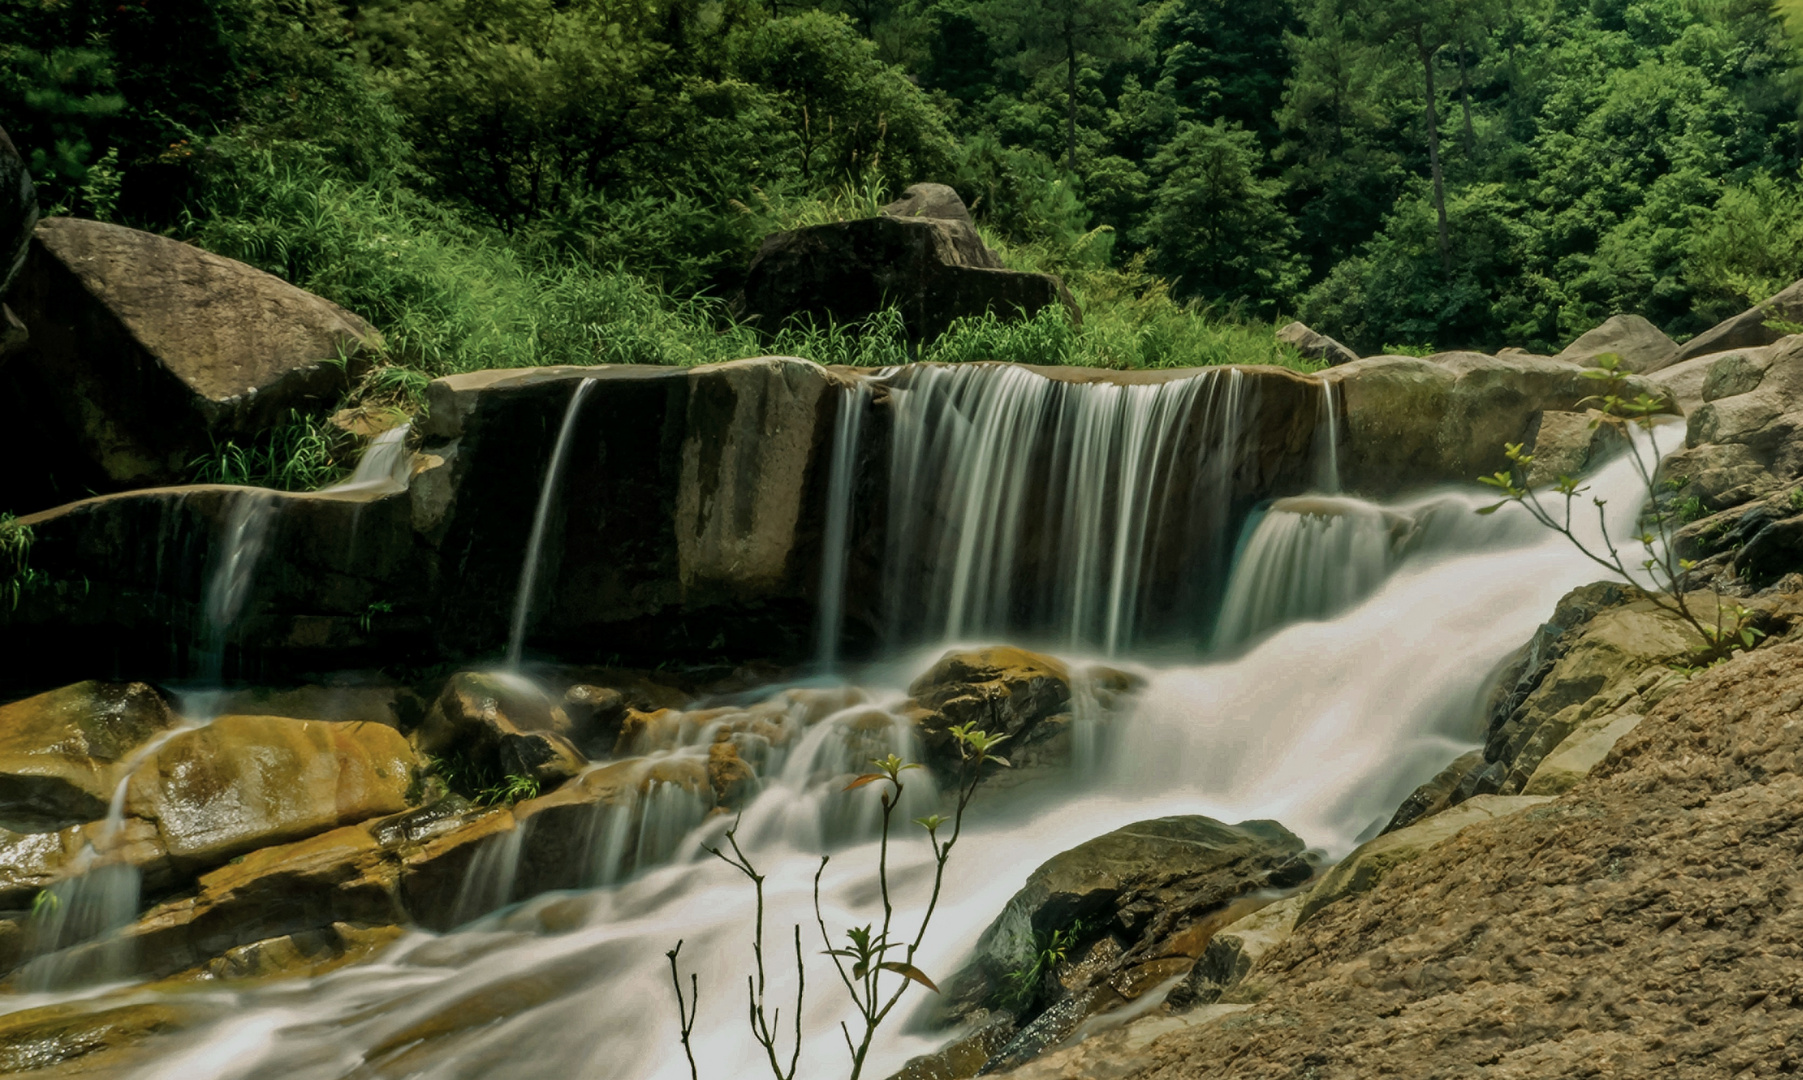 Tiantai Wasserfall 2,